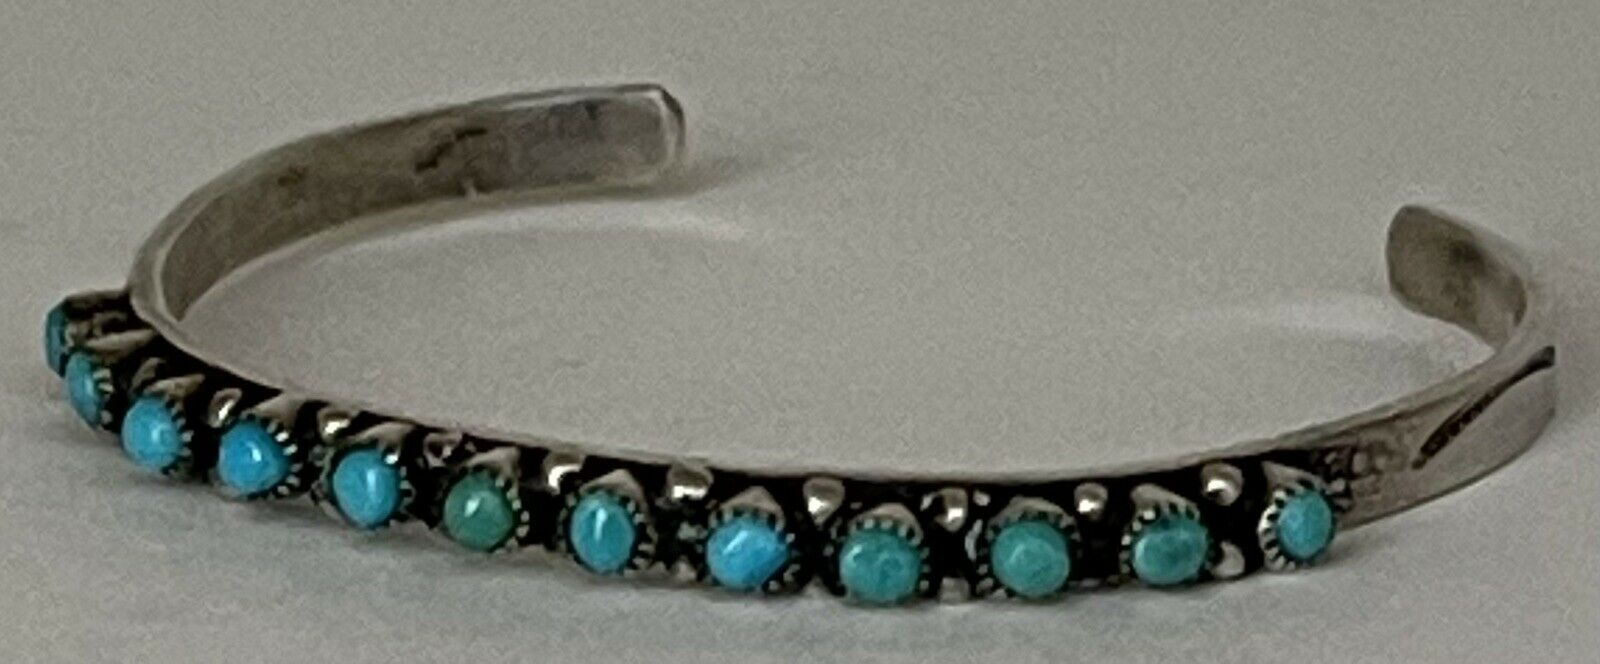 Tiny Child Size Vintage Zuni Indian Silver Snake Eye Turquoise Cuff Bracelet